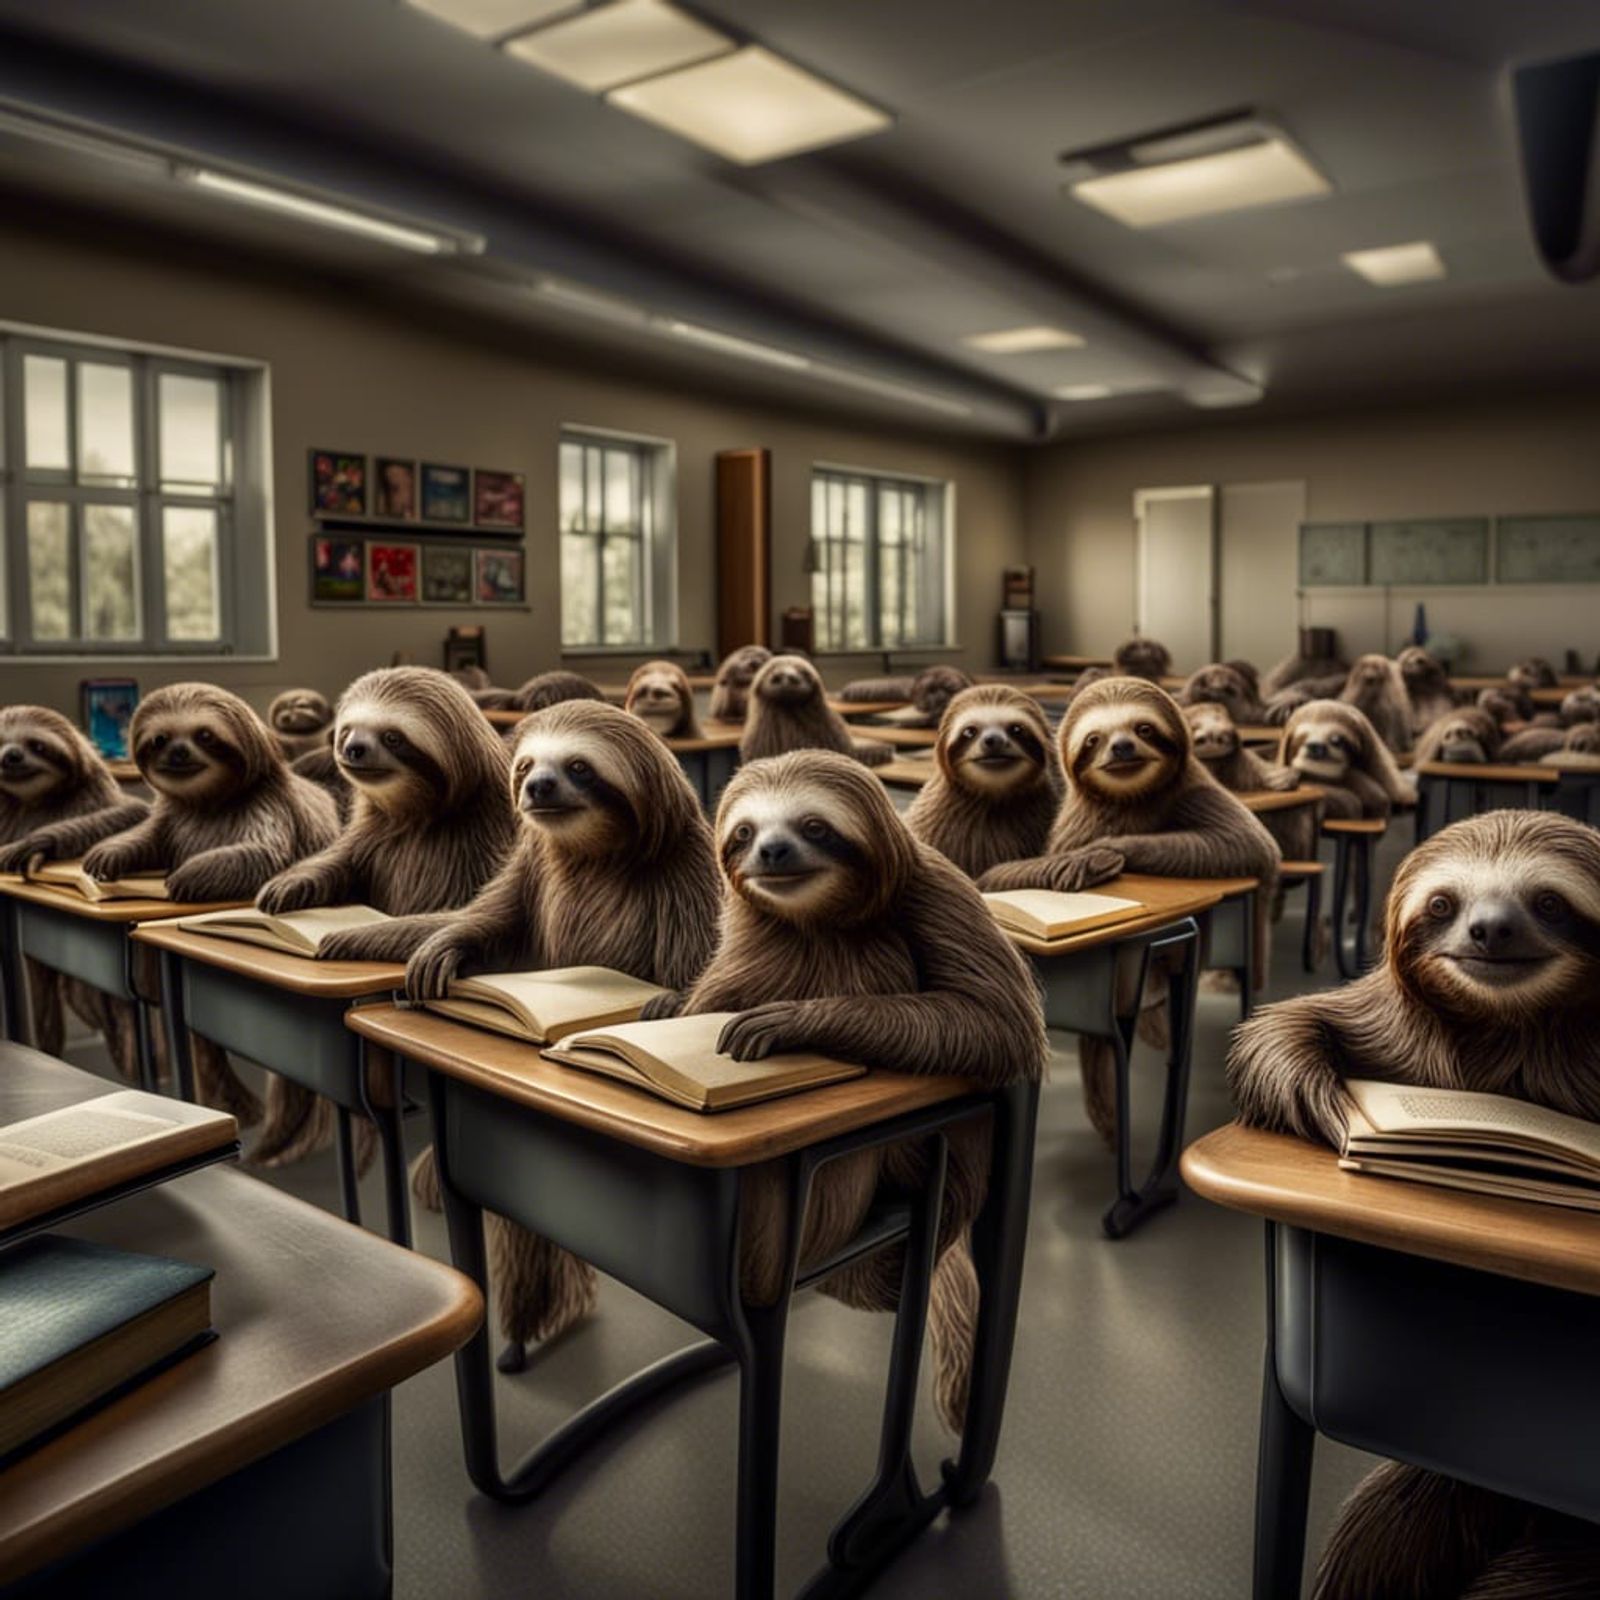 sloths at school